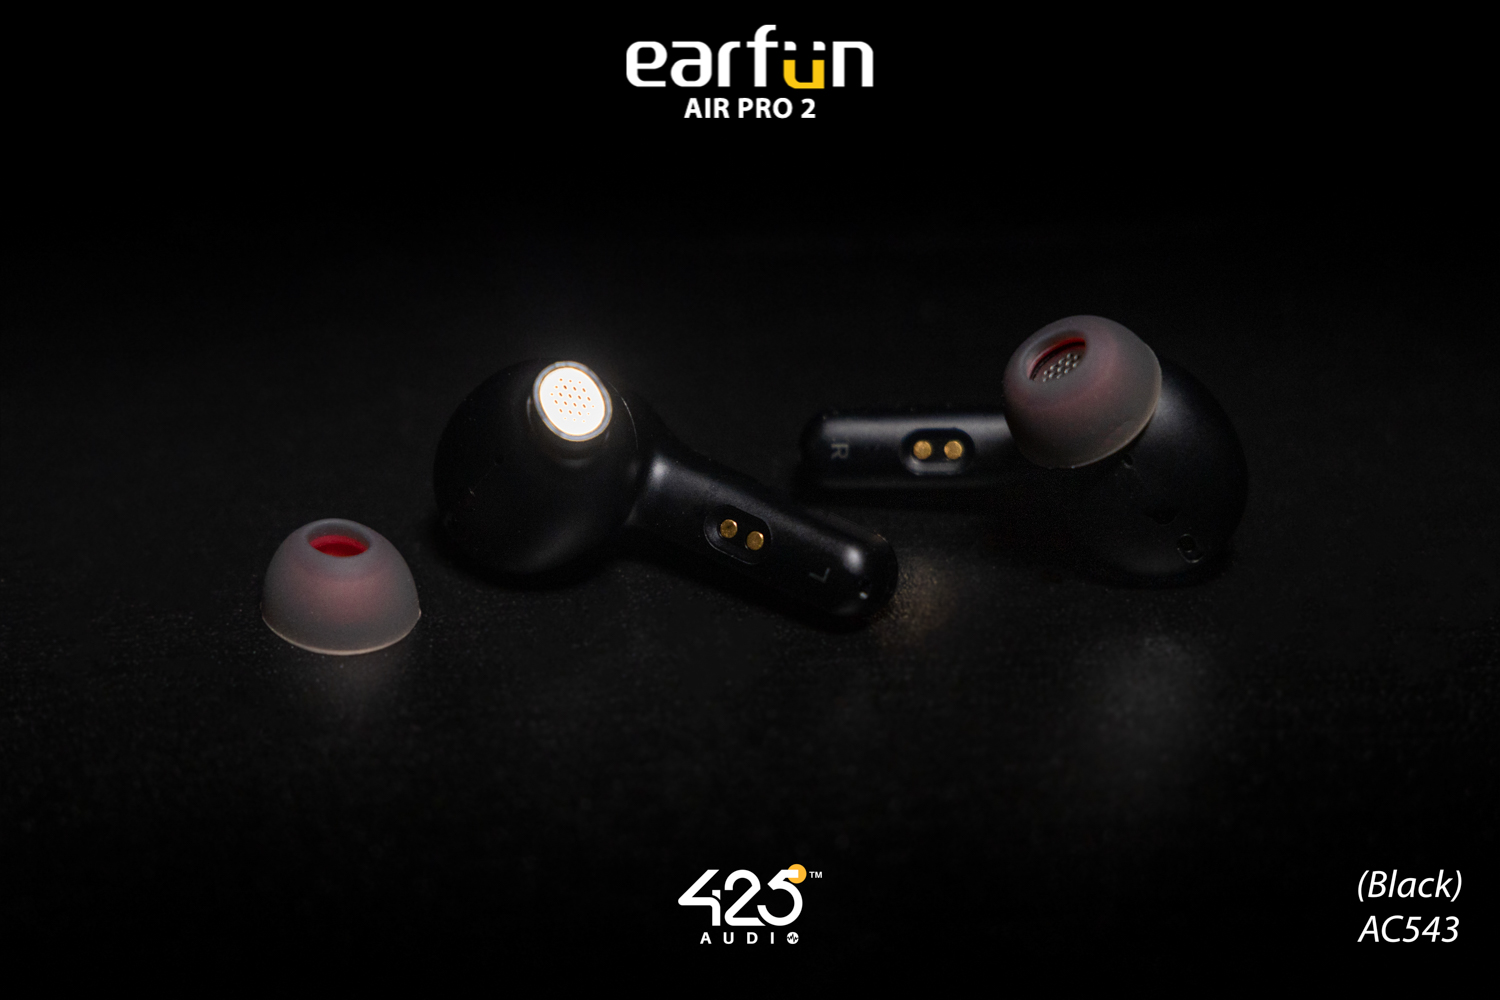 earfun air pro 2,earfun,black,bluetooth,5.2,active noise cancelling,หูฟัง,หูฟังไร้สาย,ipx5,คุยชัด,เบสหนัก